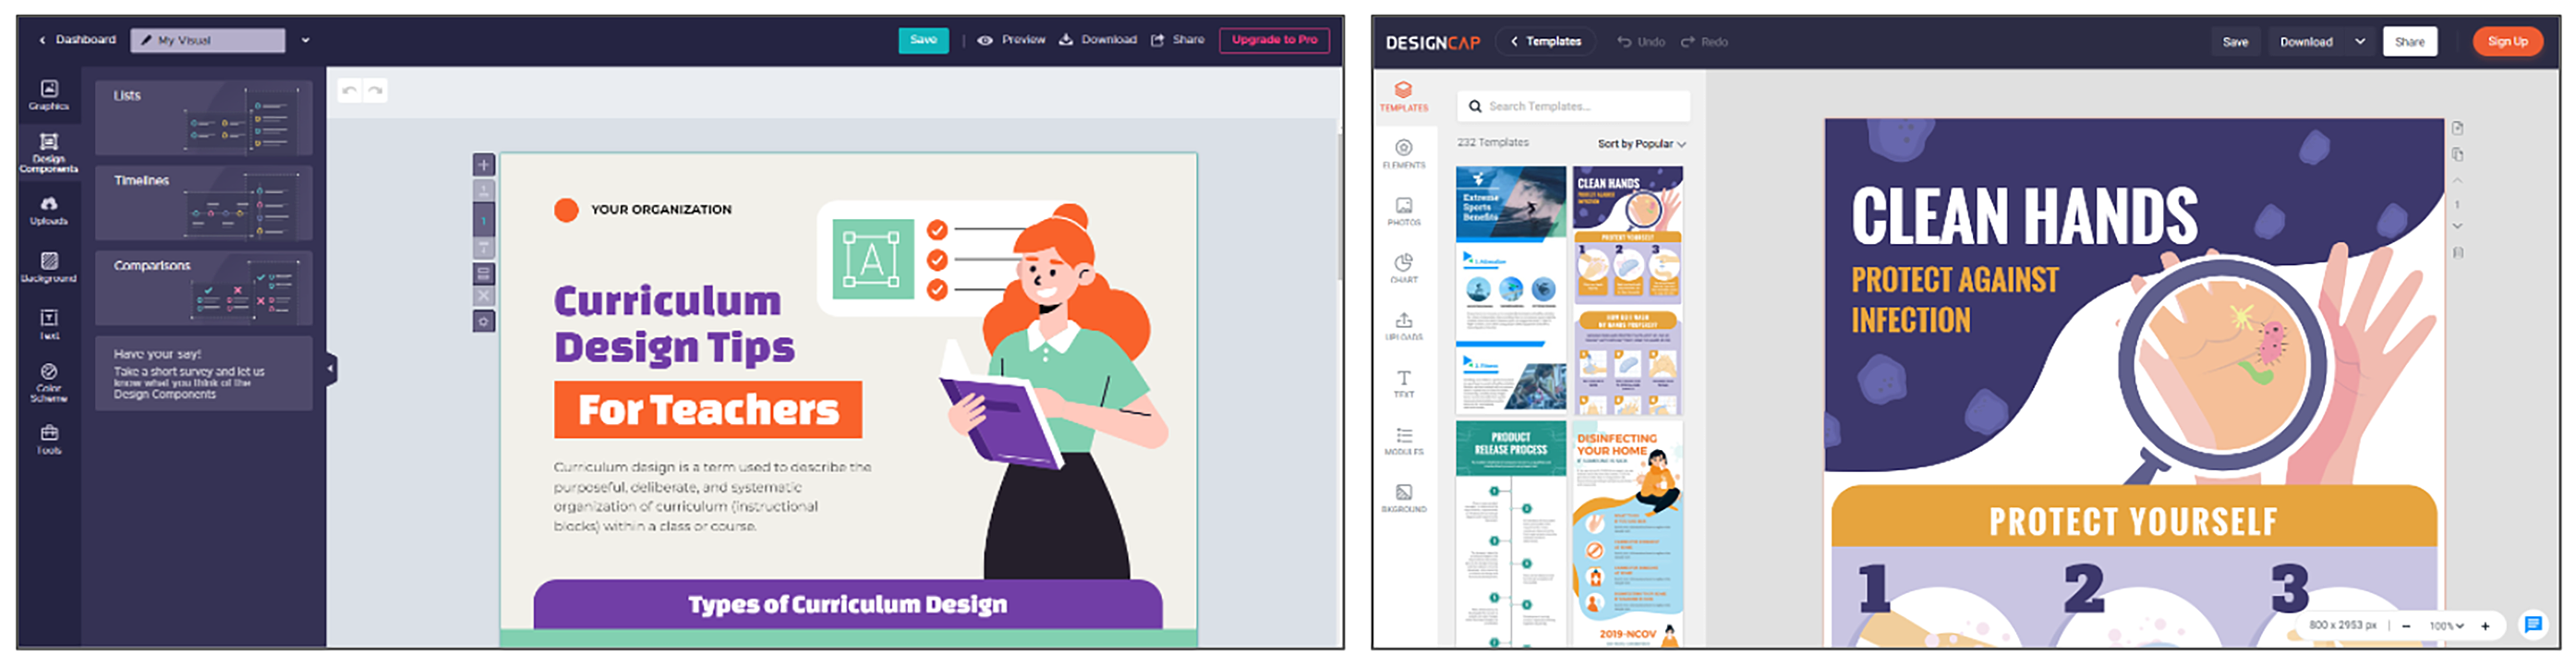 Browse thousands of Kleki images for design inspiration